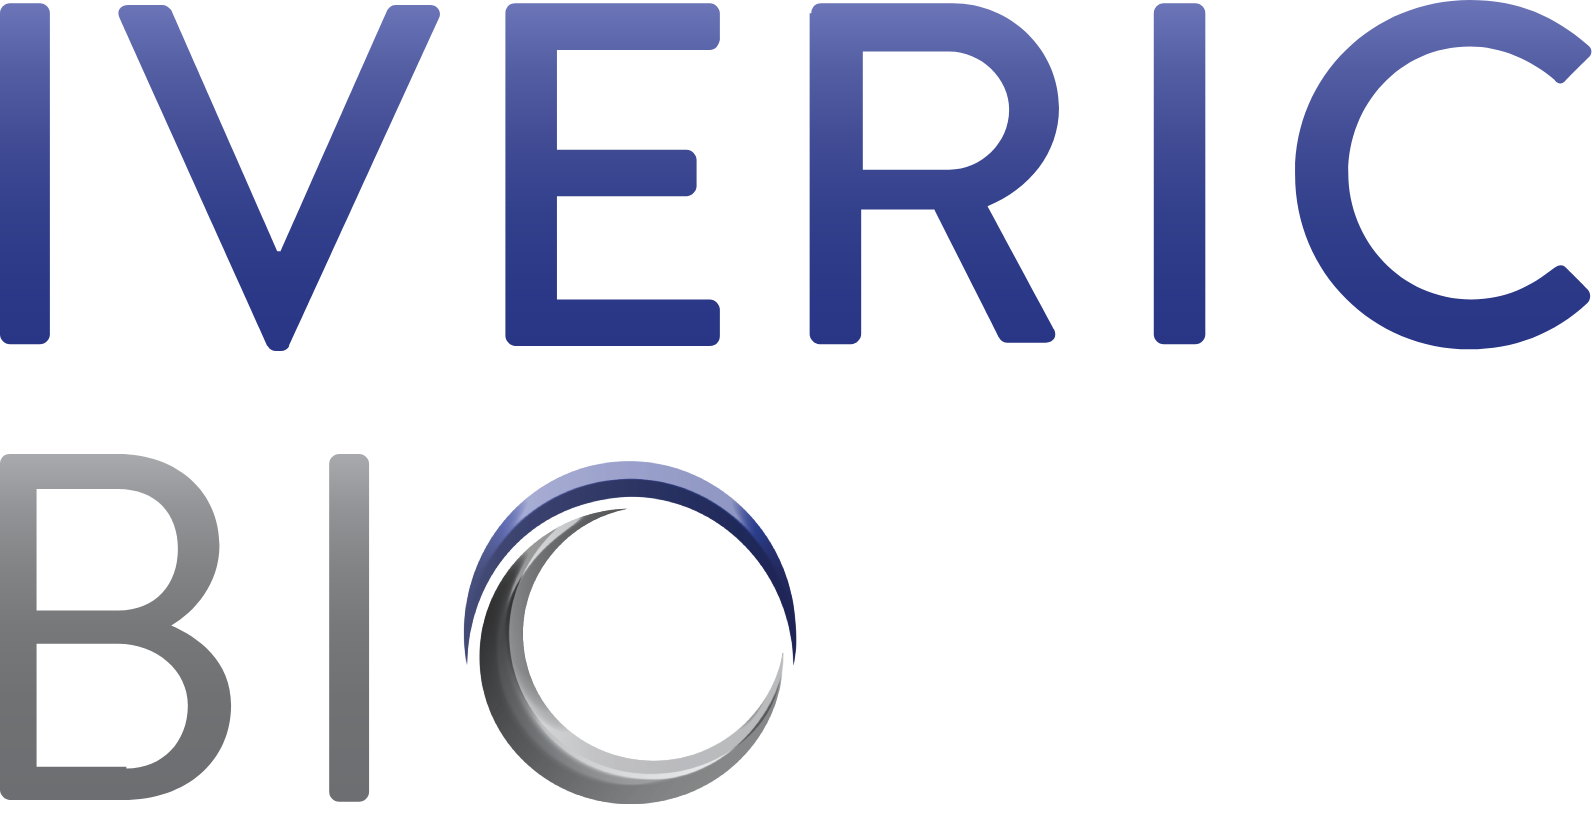 IVERIC bio logo large (transparent PNG)